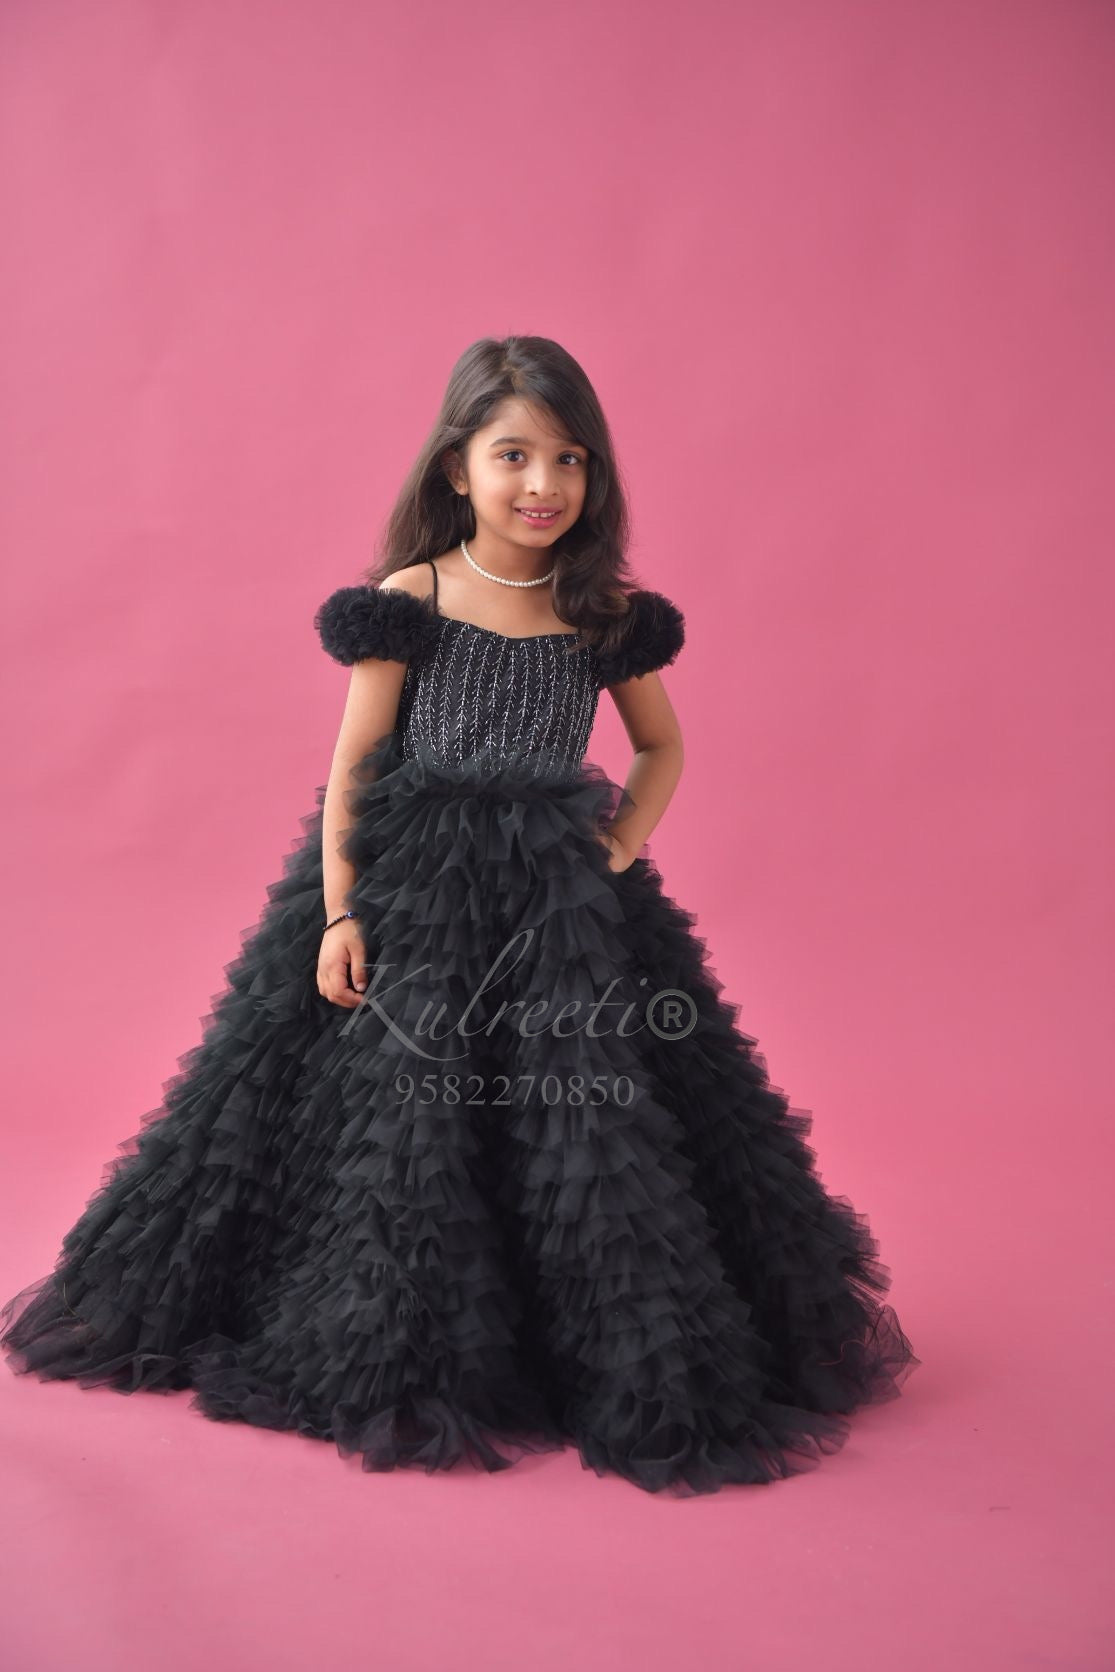 Baby Dress Black Theme | Shopee Malaysia